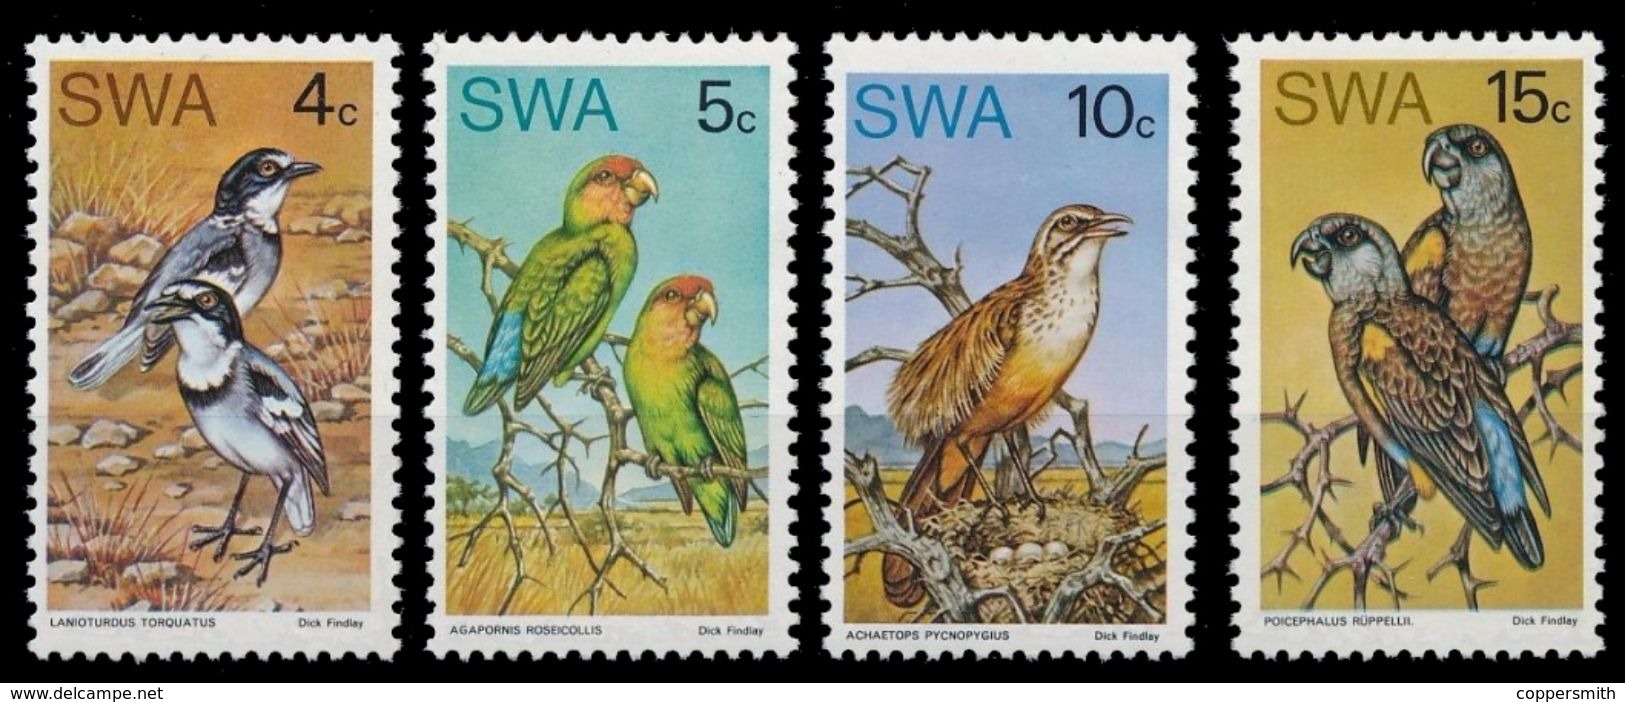 (003) SWA (Namibia / Namibie)  1974 / Birds / Oiseaux / Vögel / Vogels ** / Mnh Michel 392-95 - Namibia (1990- ...)